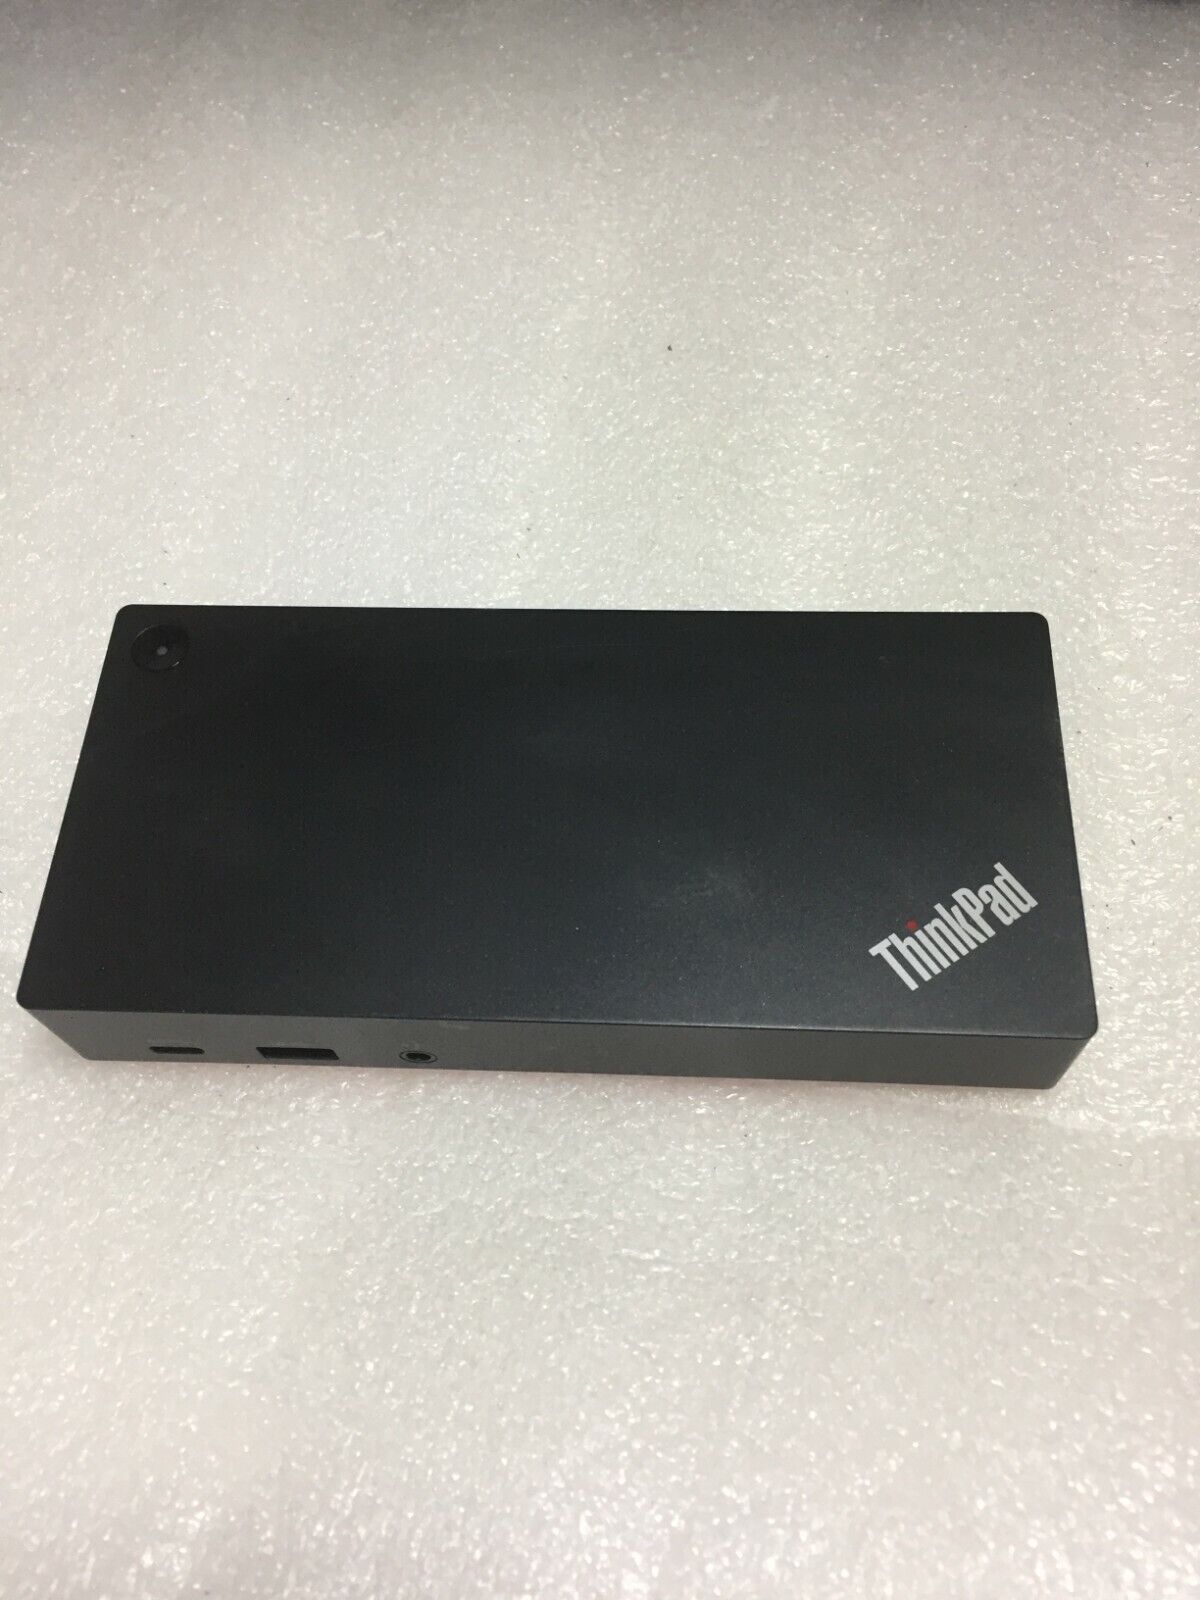 Lenovo ThinkPad USB-C Dock Gen 2 LDC-G2 40AS 03X7609 Docking Station FREE S/H